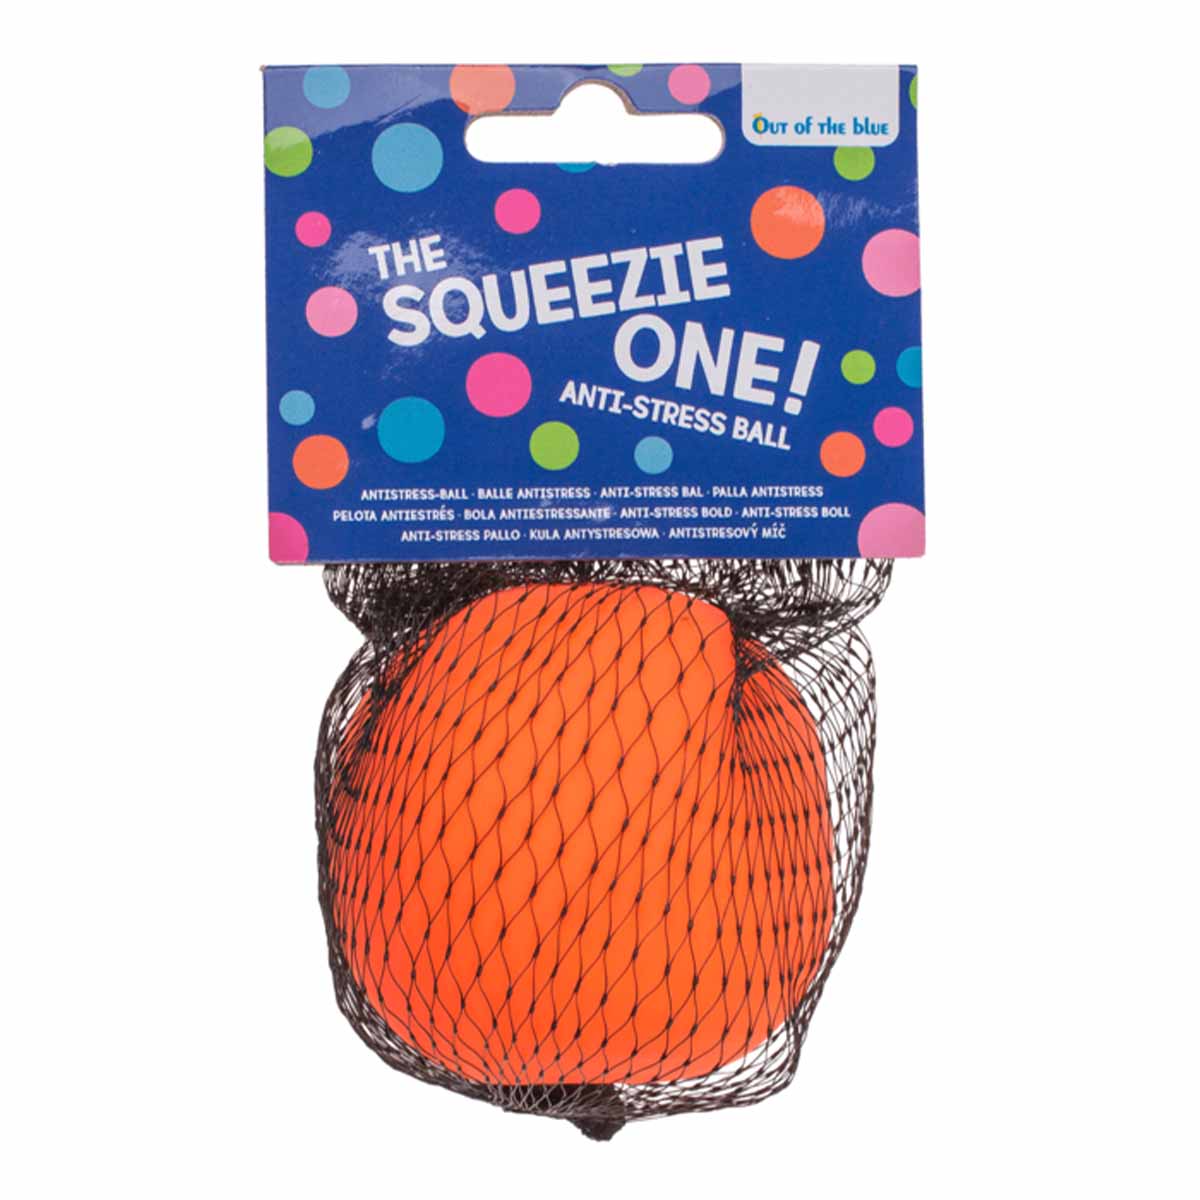 Squeeze anti stressboll